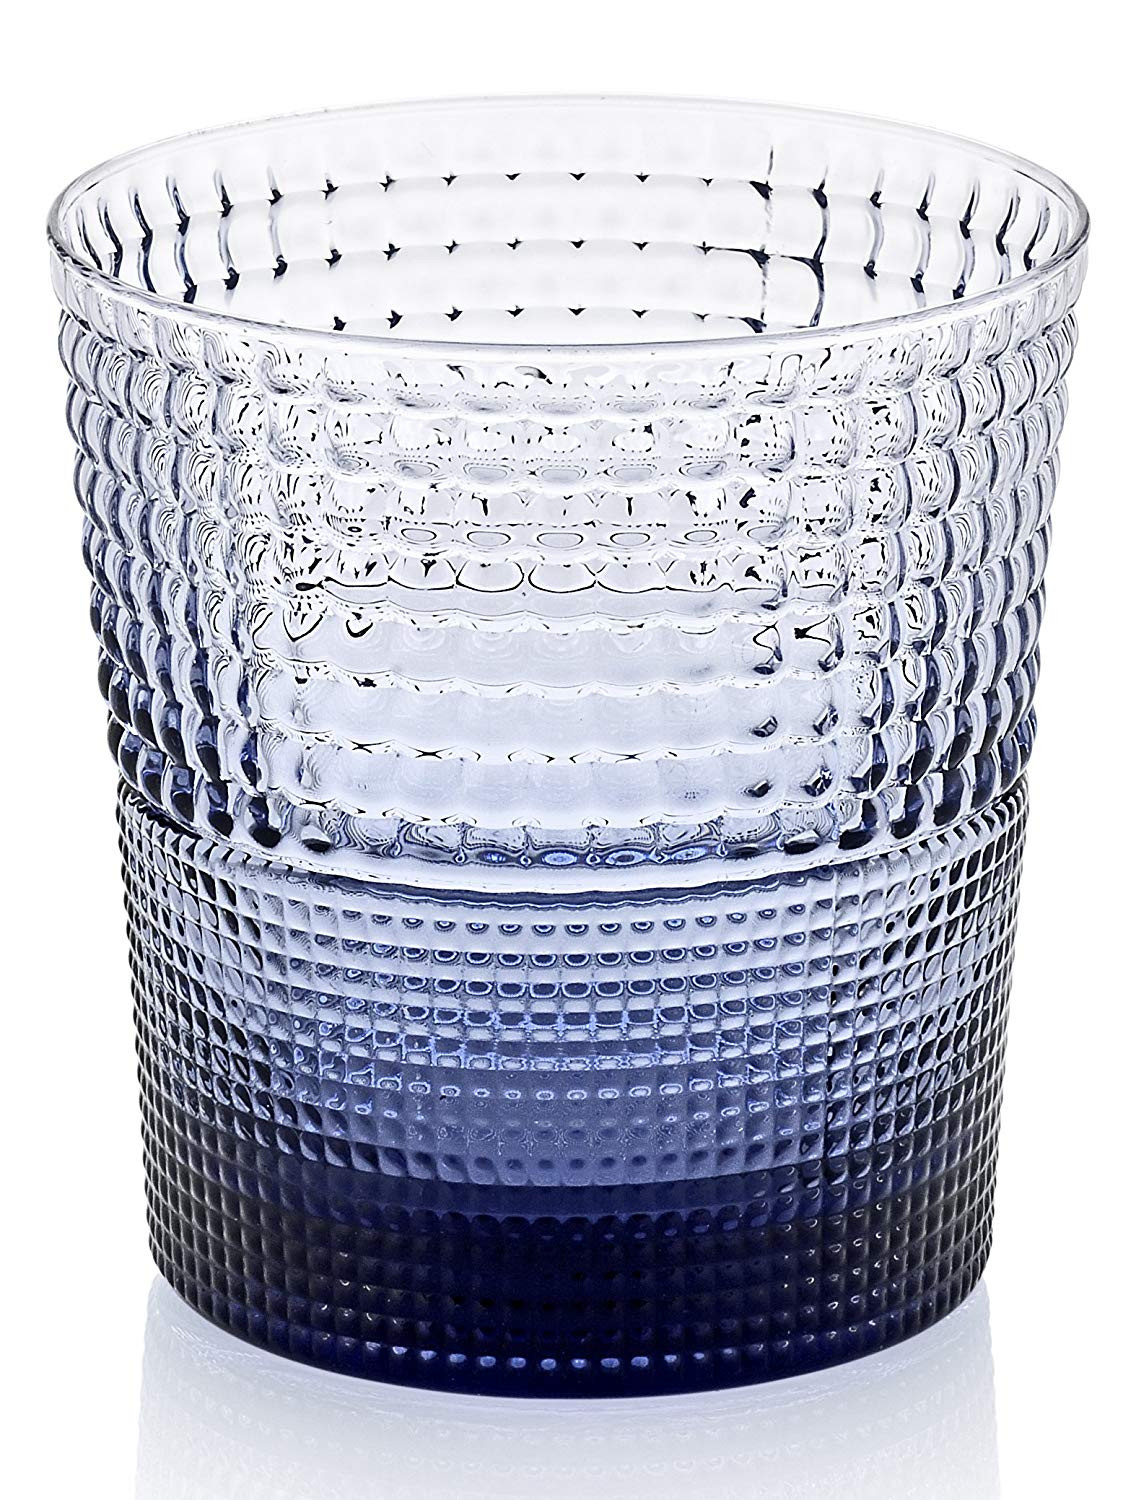 6 Glass Cube Vase Of Amazon Com Ivv Glassware Speedy Cooler Glass Set Of 6 13 1 2 Oz with Amazon Com Ivv Glassware Speedy Cooler Glass Set Of 6 13 1 2 Oz Clear Kitchen Dining